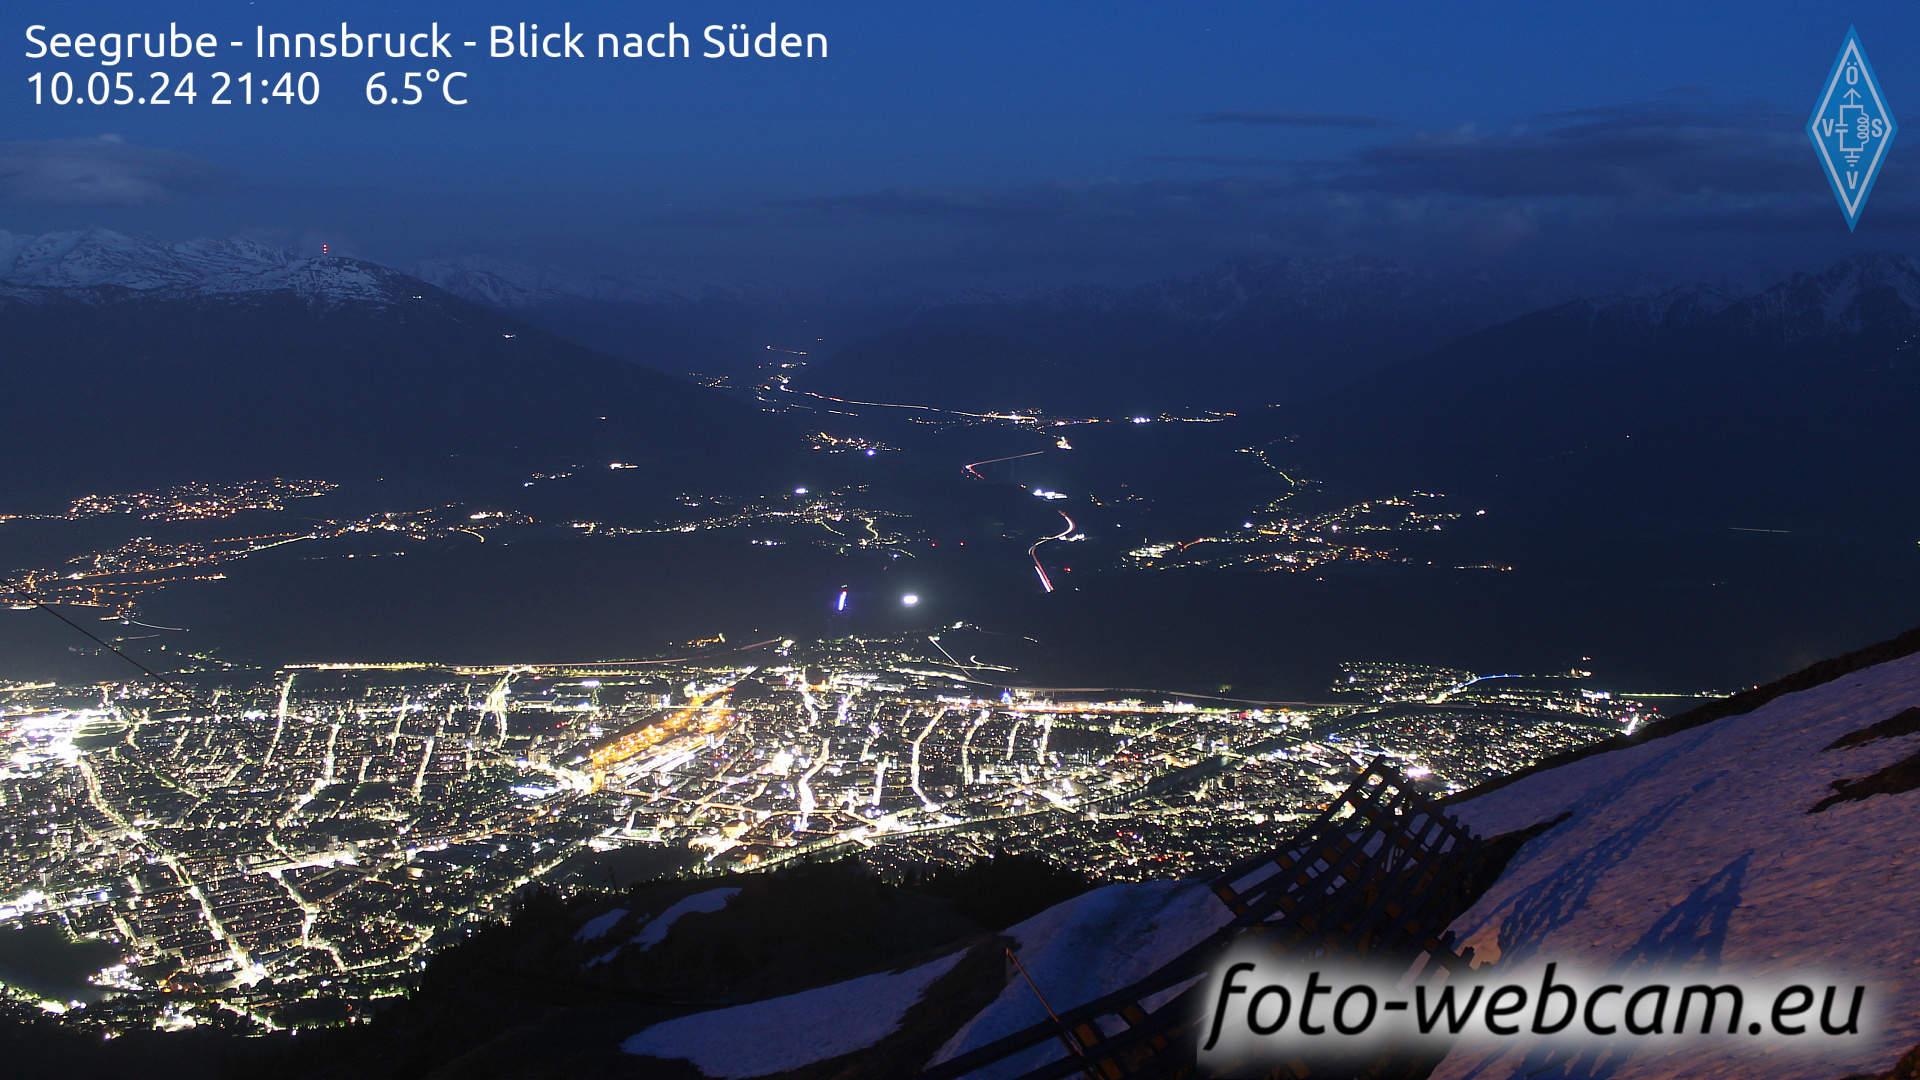 Innsbruck Gio. 21:48